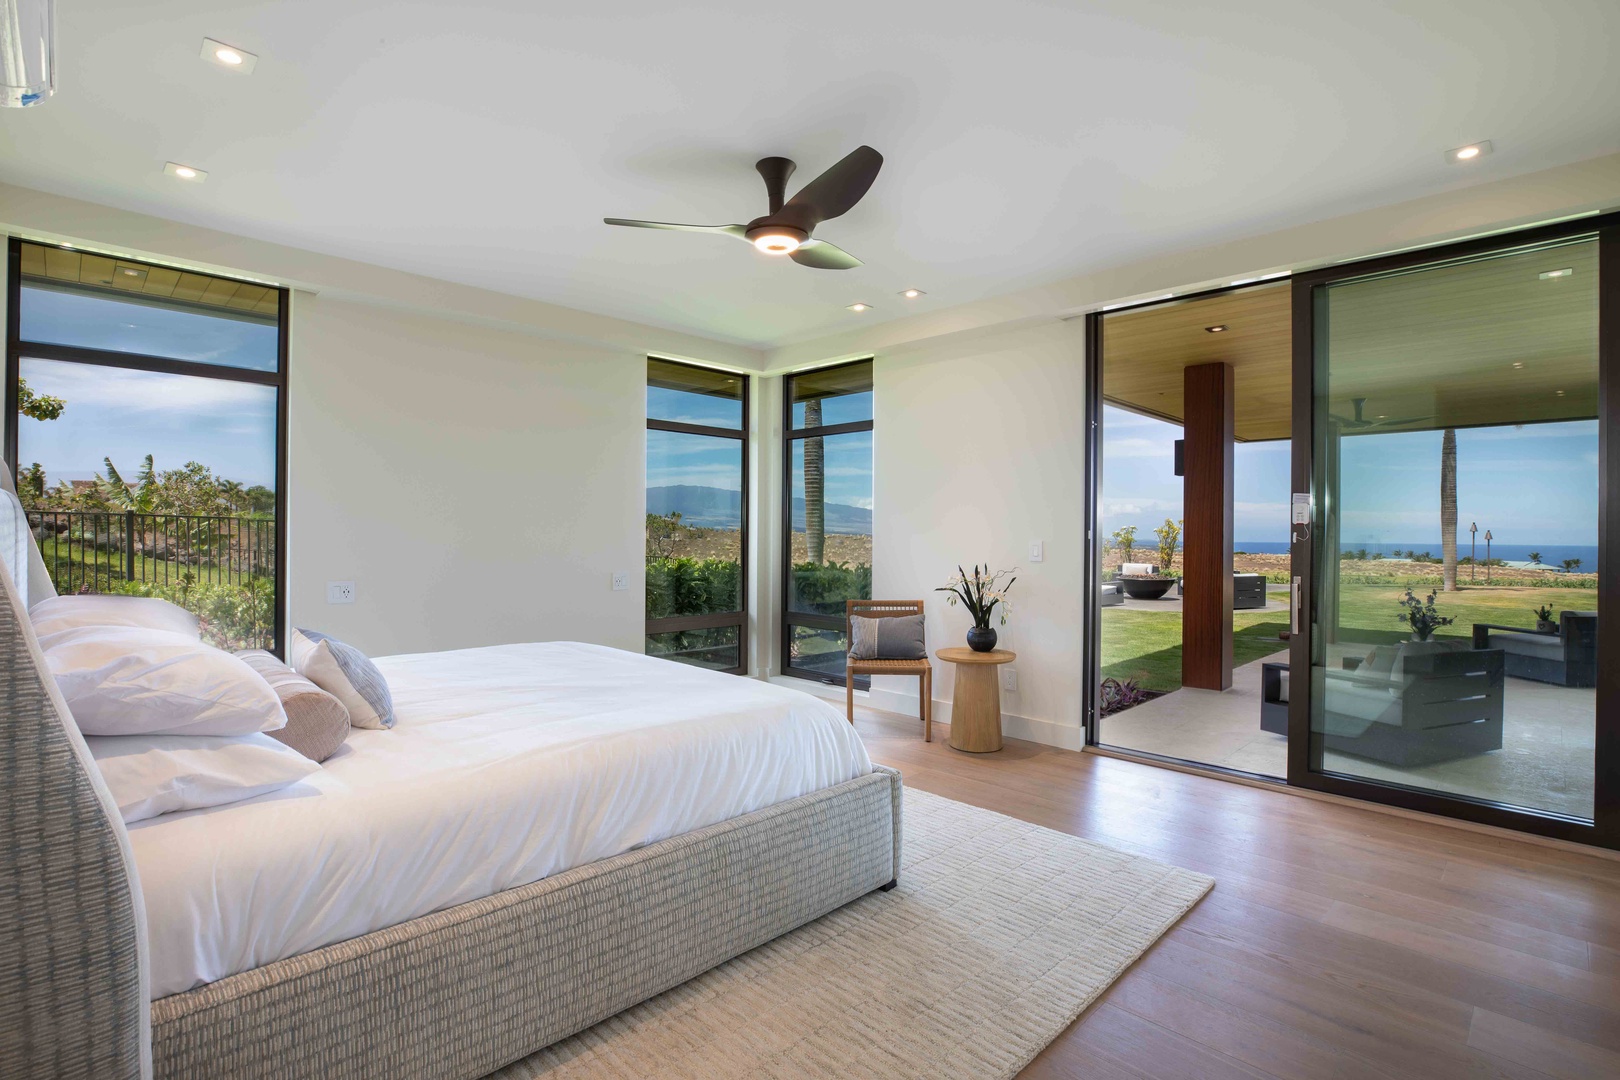 Kamuela Vacation Rentals, Hapuna Estates #8 - Primary Suite 2 off the main lanai with ocean views